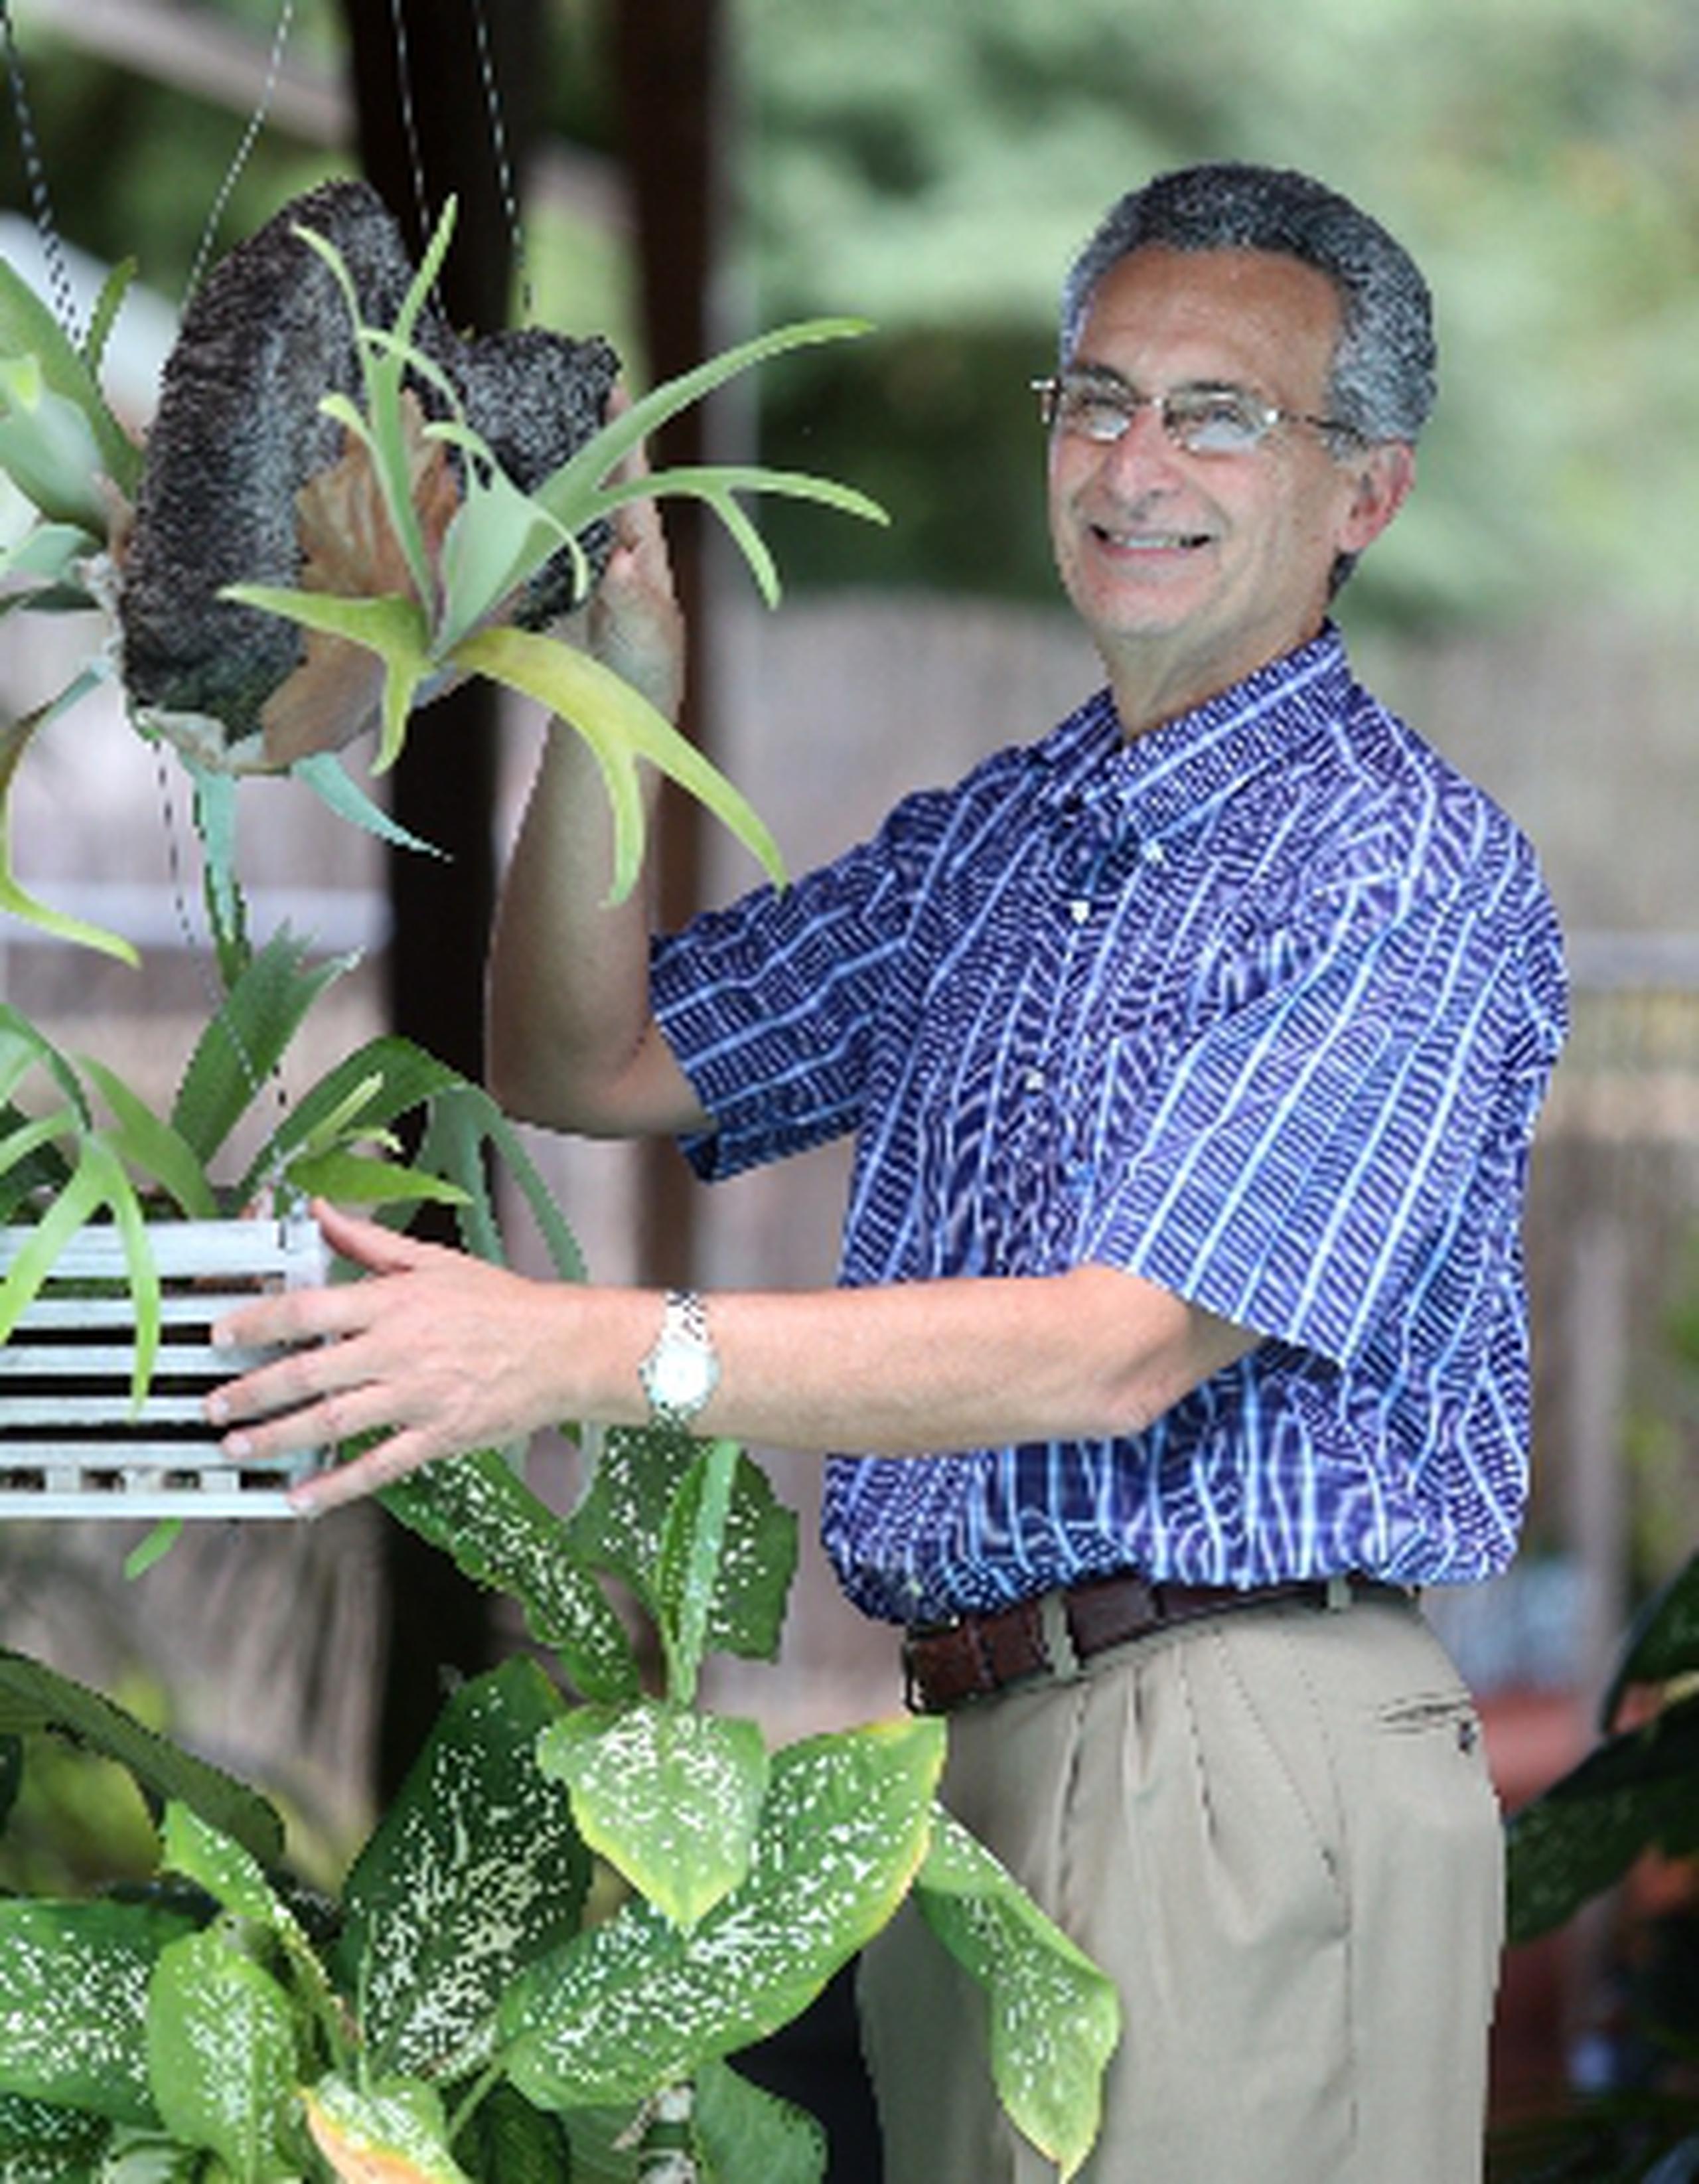 Al secretario de Salud, Francisco Joglar Pesquera, le encanta estar rodeado por naturaleza. (juan.martinez@gfrmedia.com)